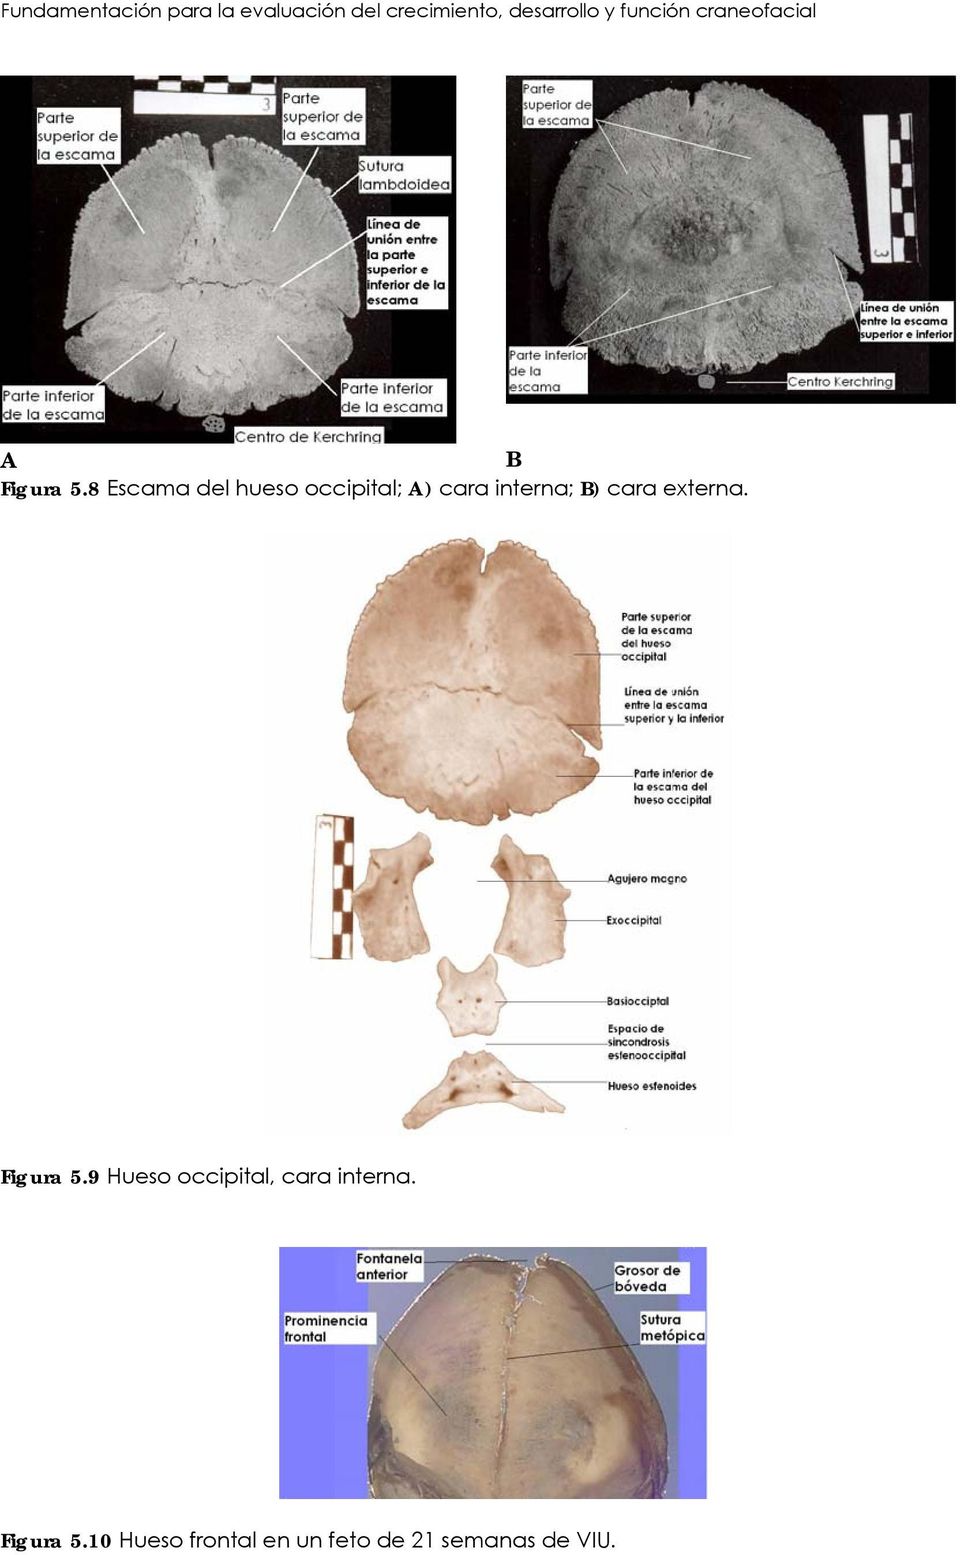 8 Escama del hueso occipital; A) cara interna; B) cara externa.